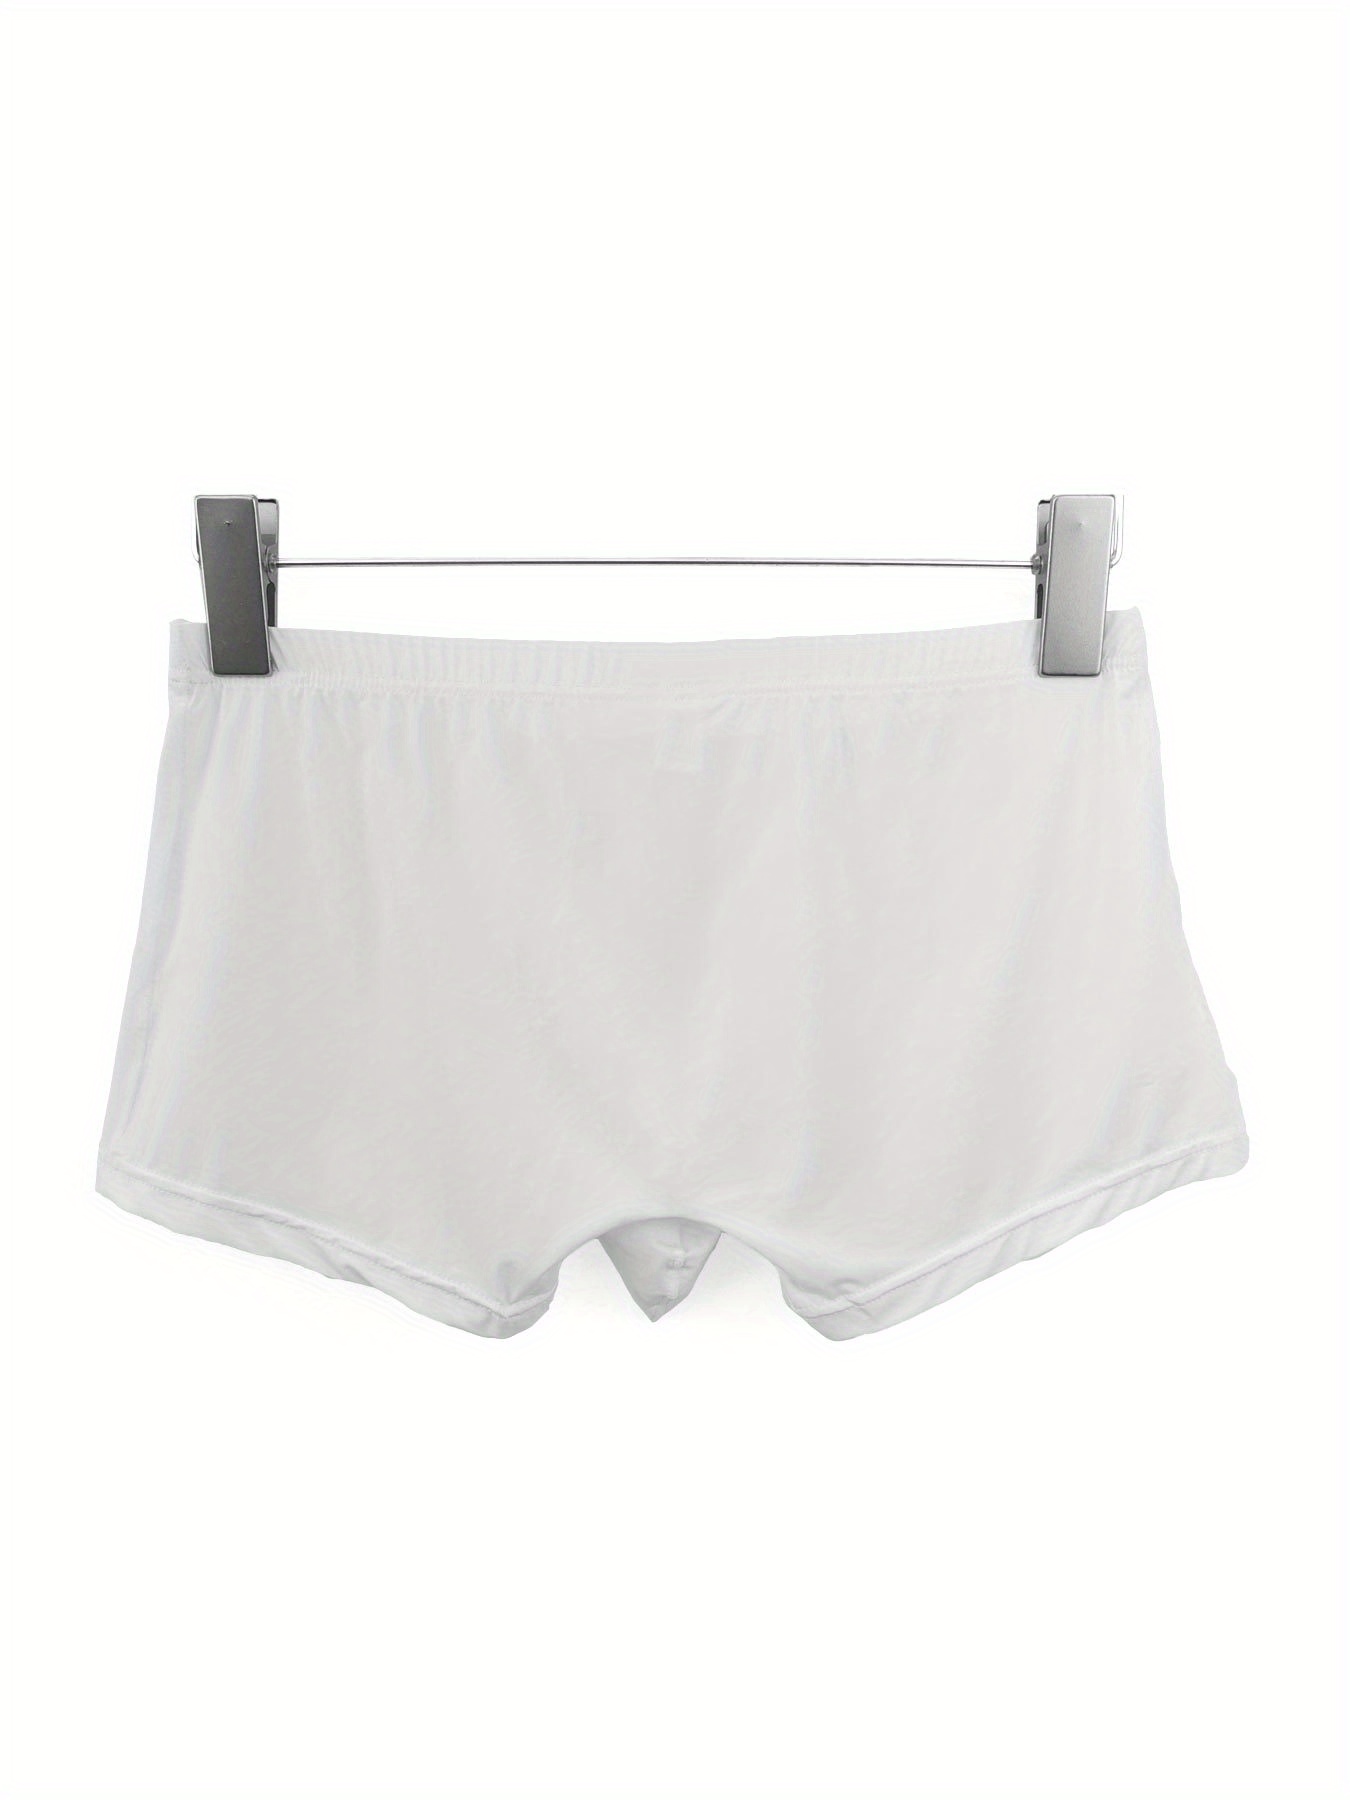 Elephant Trunk Underwear Men, 2pcs Mesh Underpants Male Casual